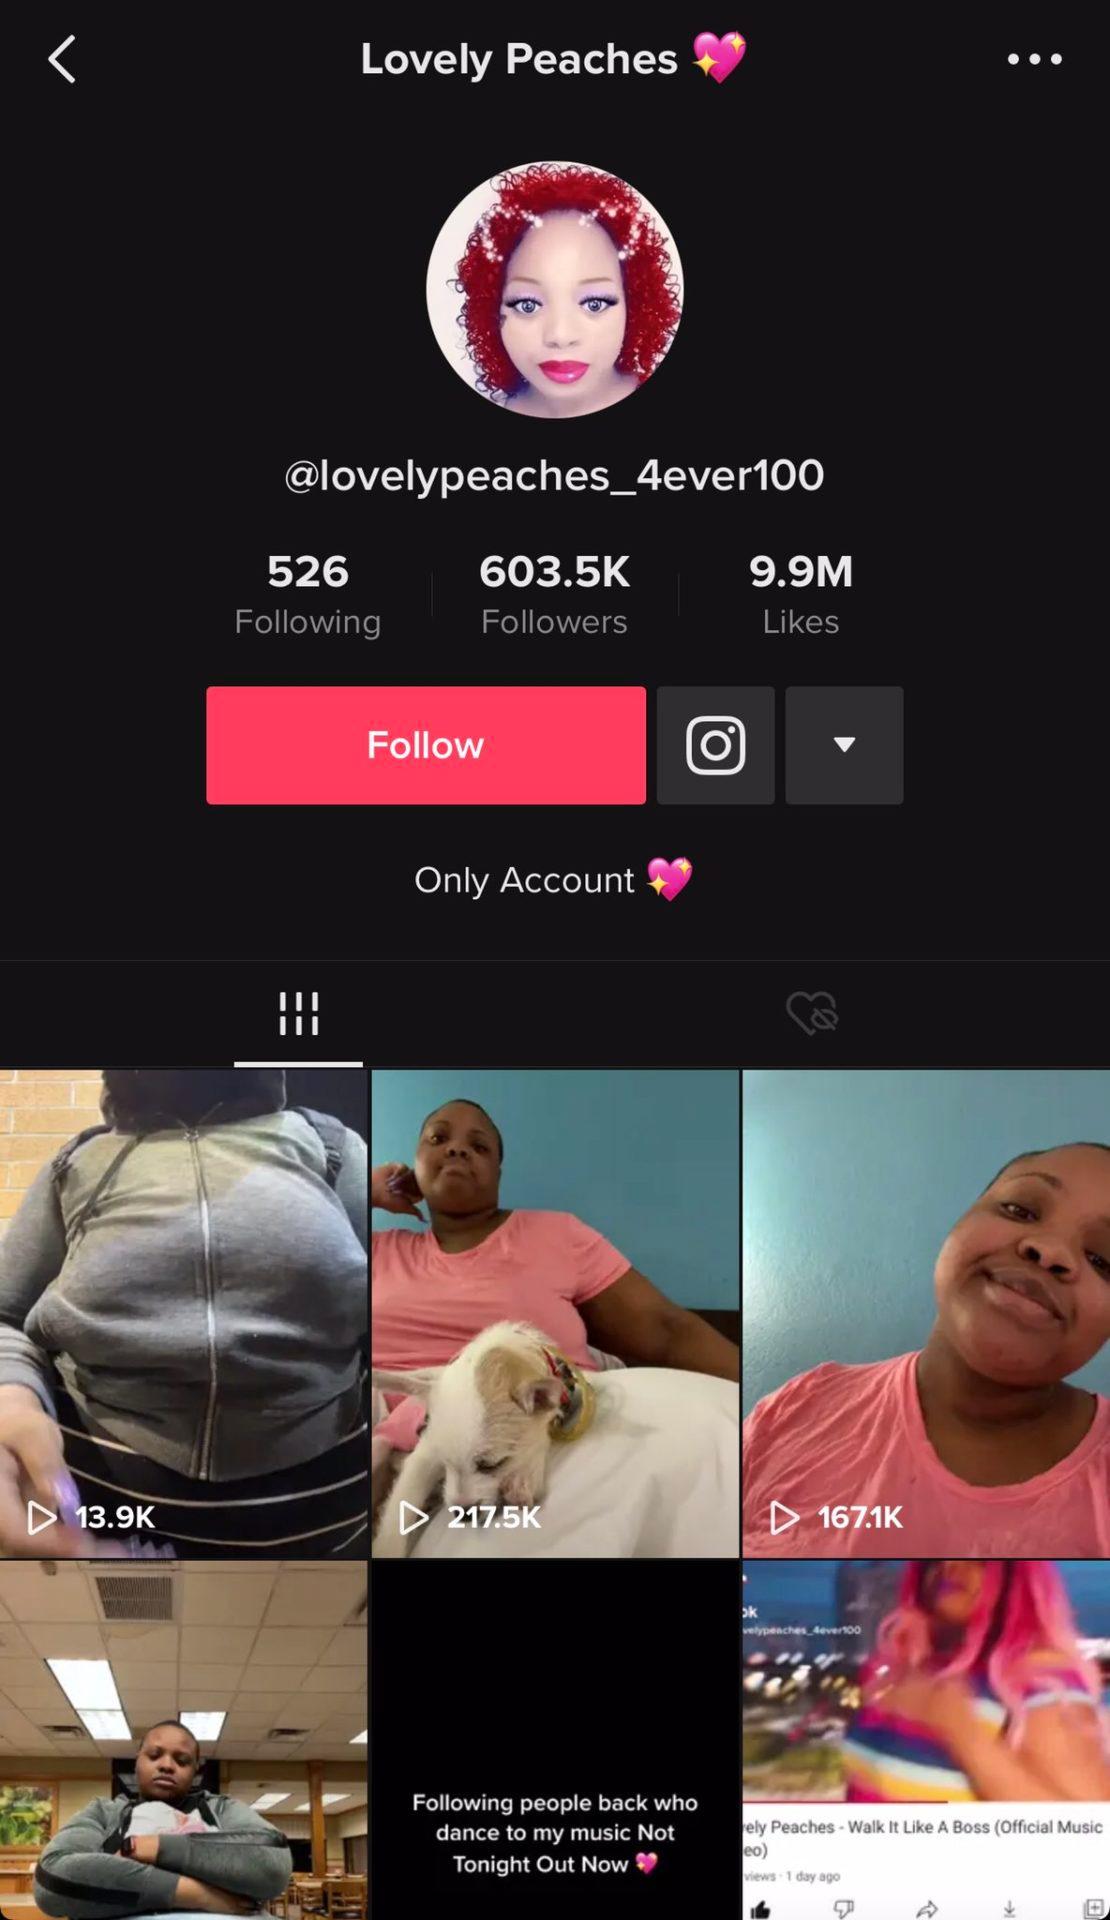 Lovely Peaches TikTok account boasts over 600k followers